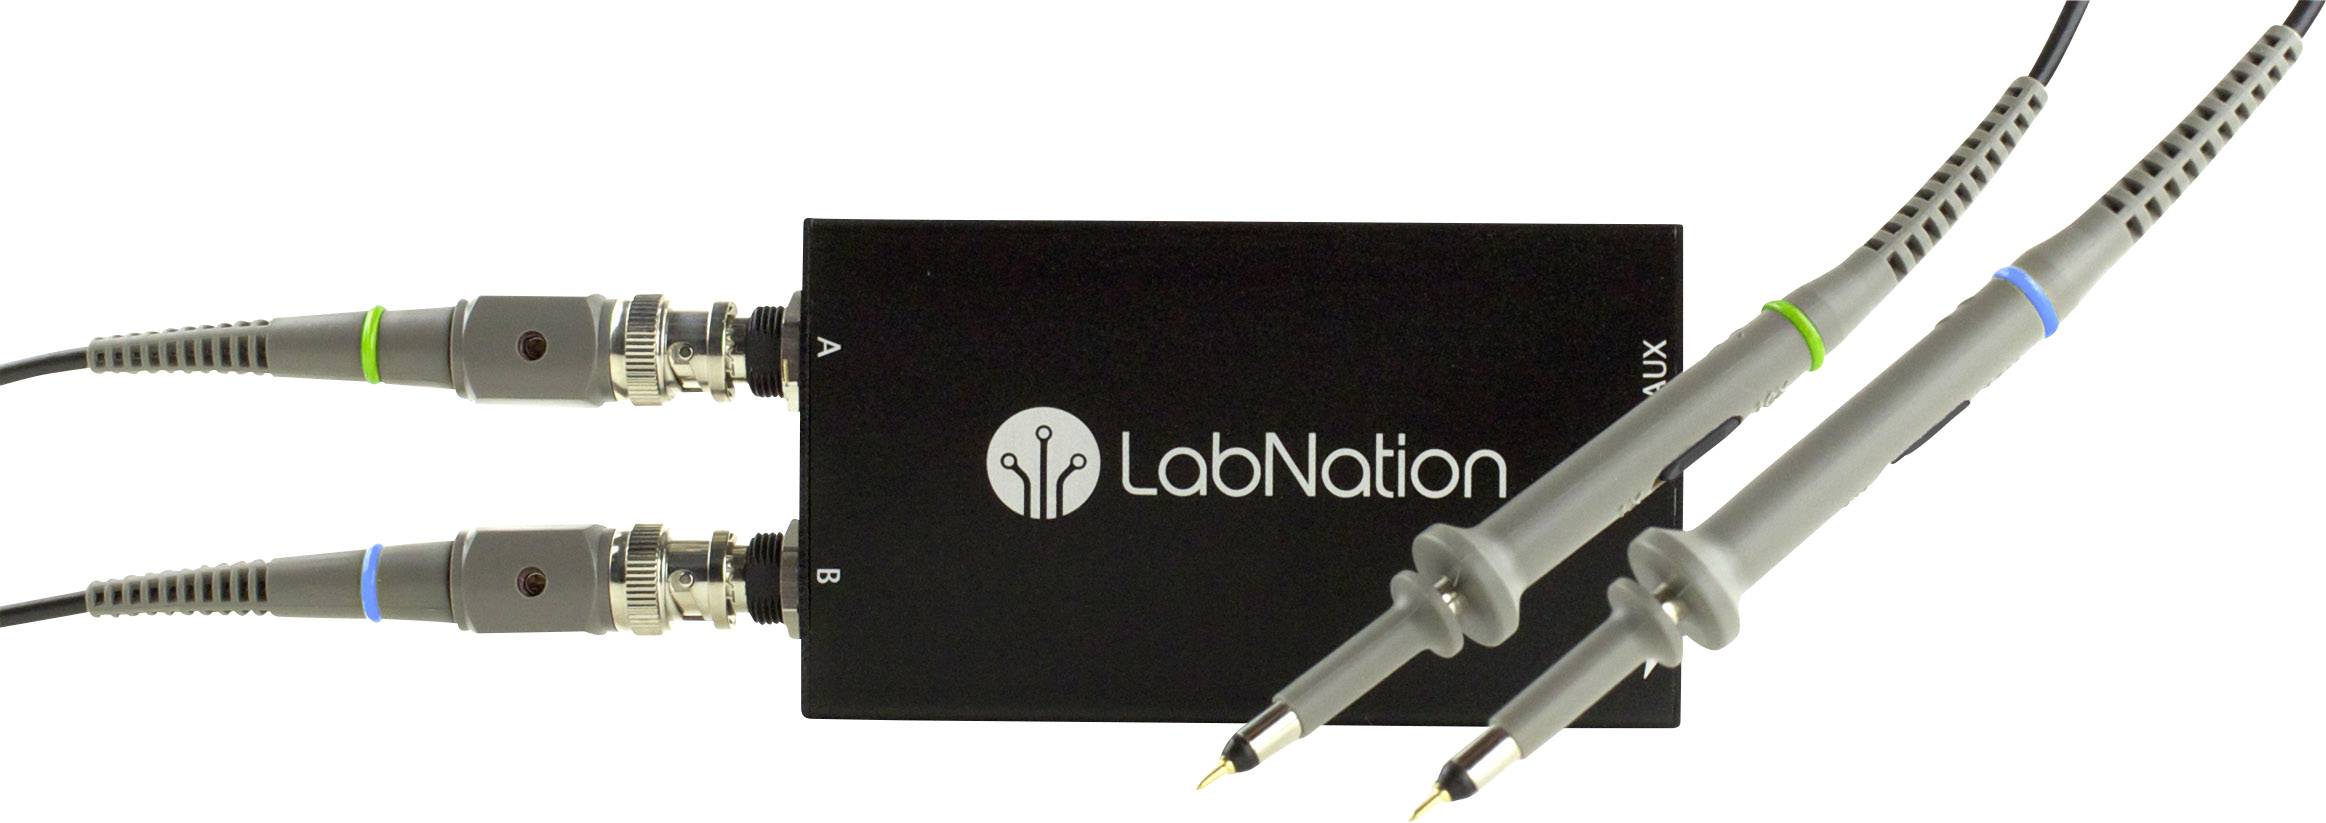 labnation smartscope usb 3.0